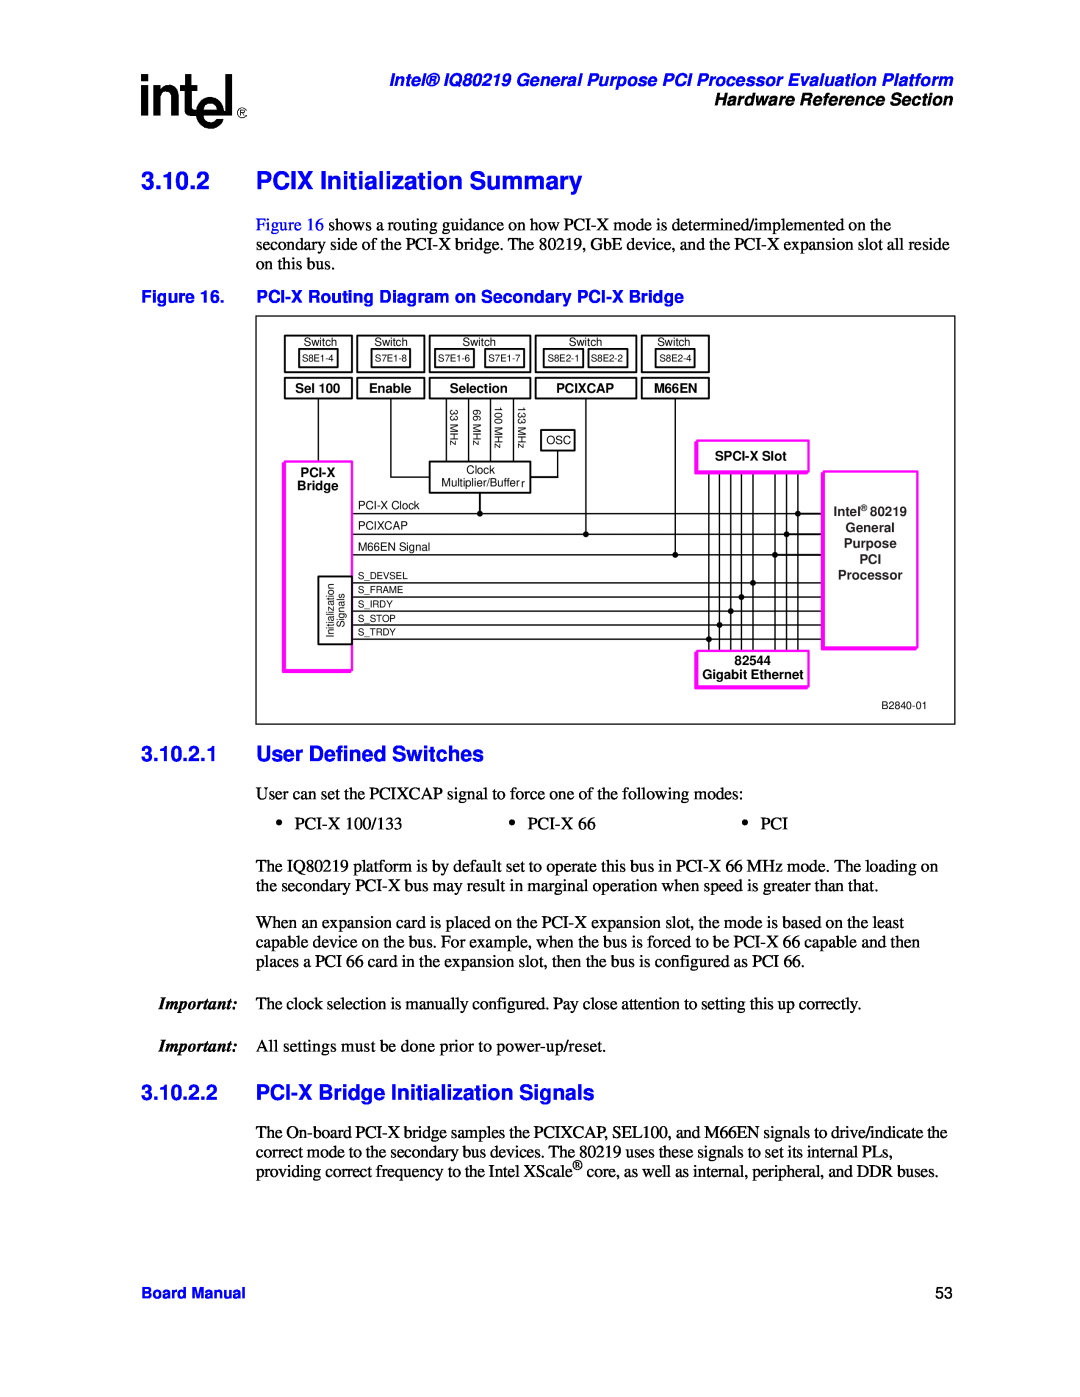 Intel IQ80219 PCIX Initialization Summary, User Defined Switches, PCI-X Bridge Initialization Signals, Board Manual, M66EN 